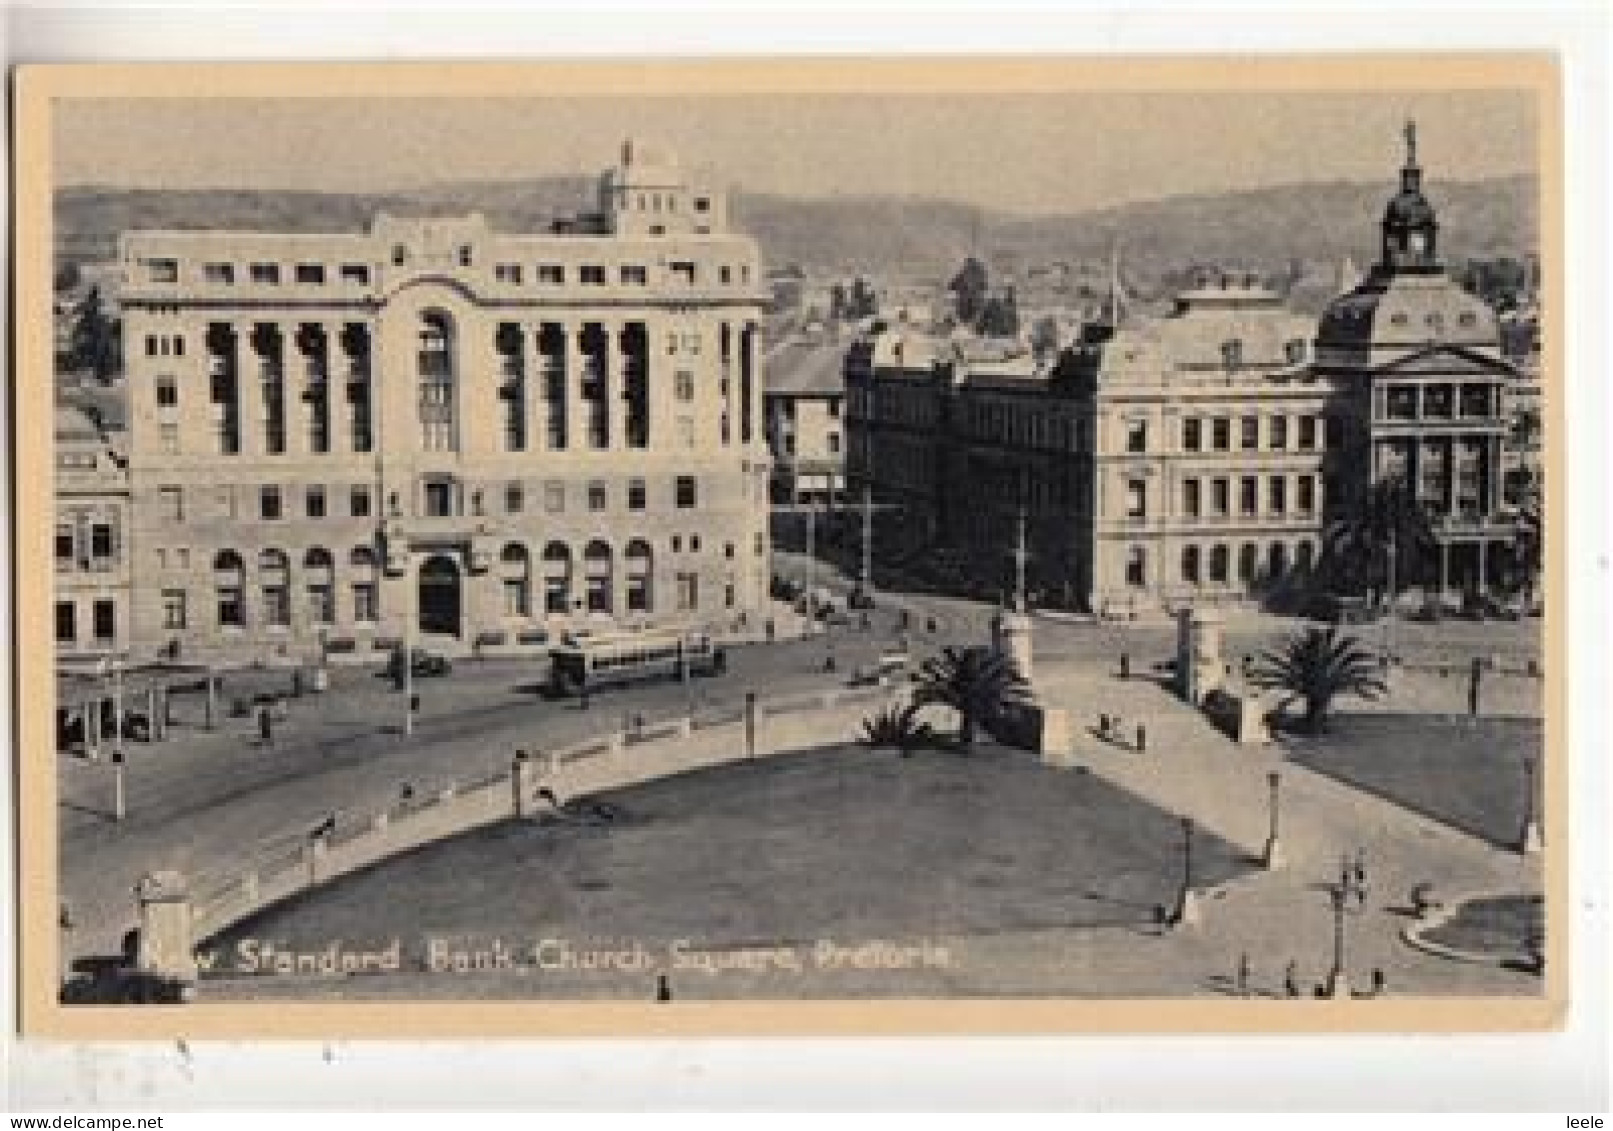 D22.  Vintage Postcard. New Standard Bank, Church Square, Pretoria. South Africa. - Sudáfrica